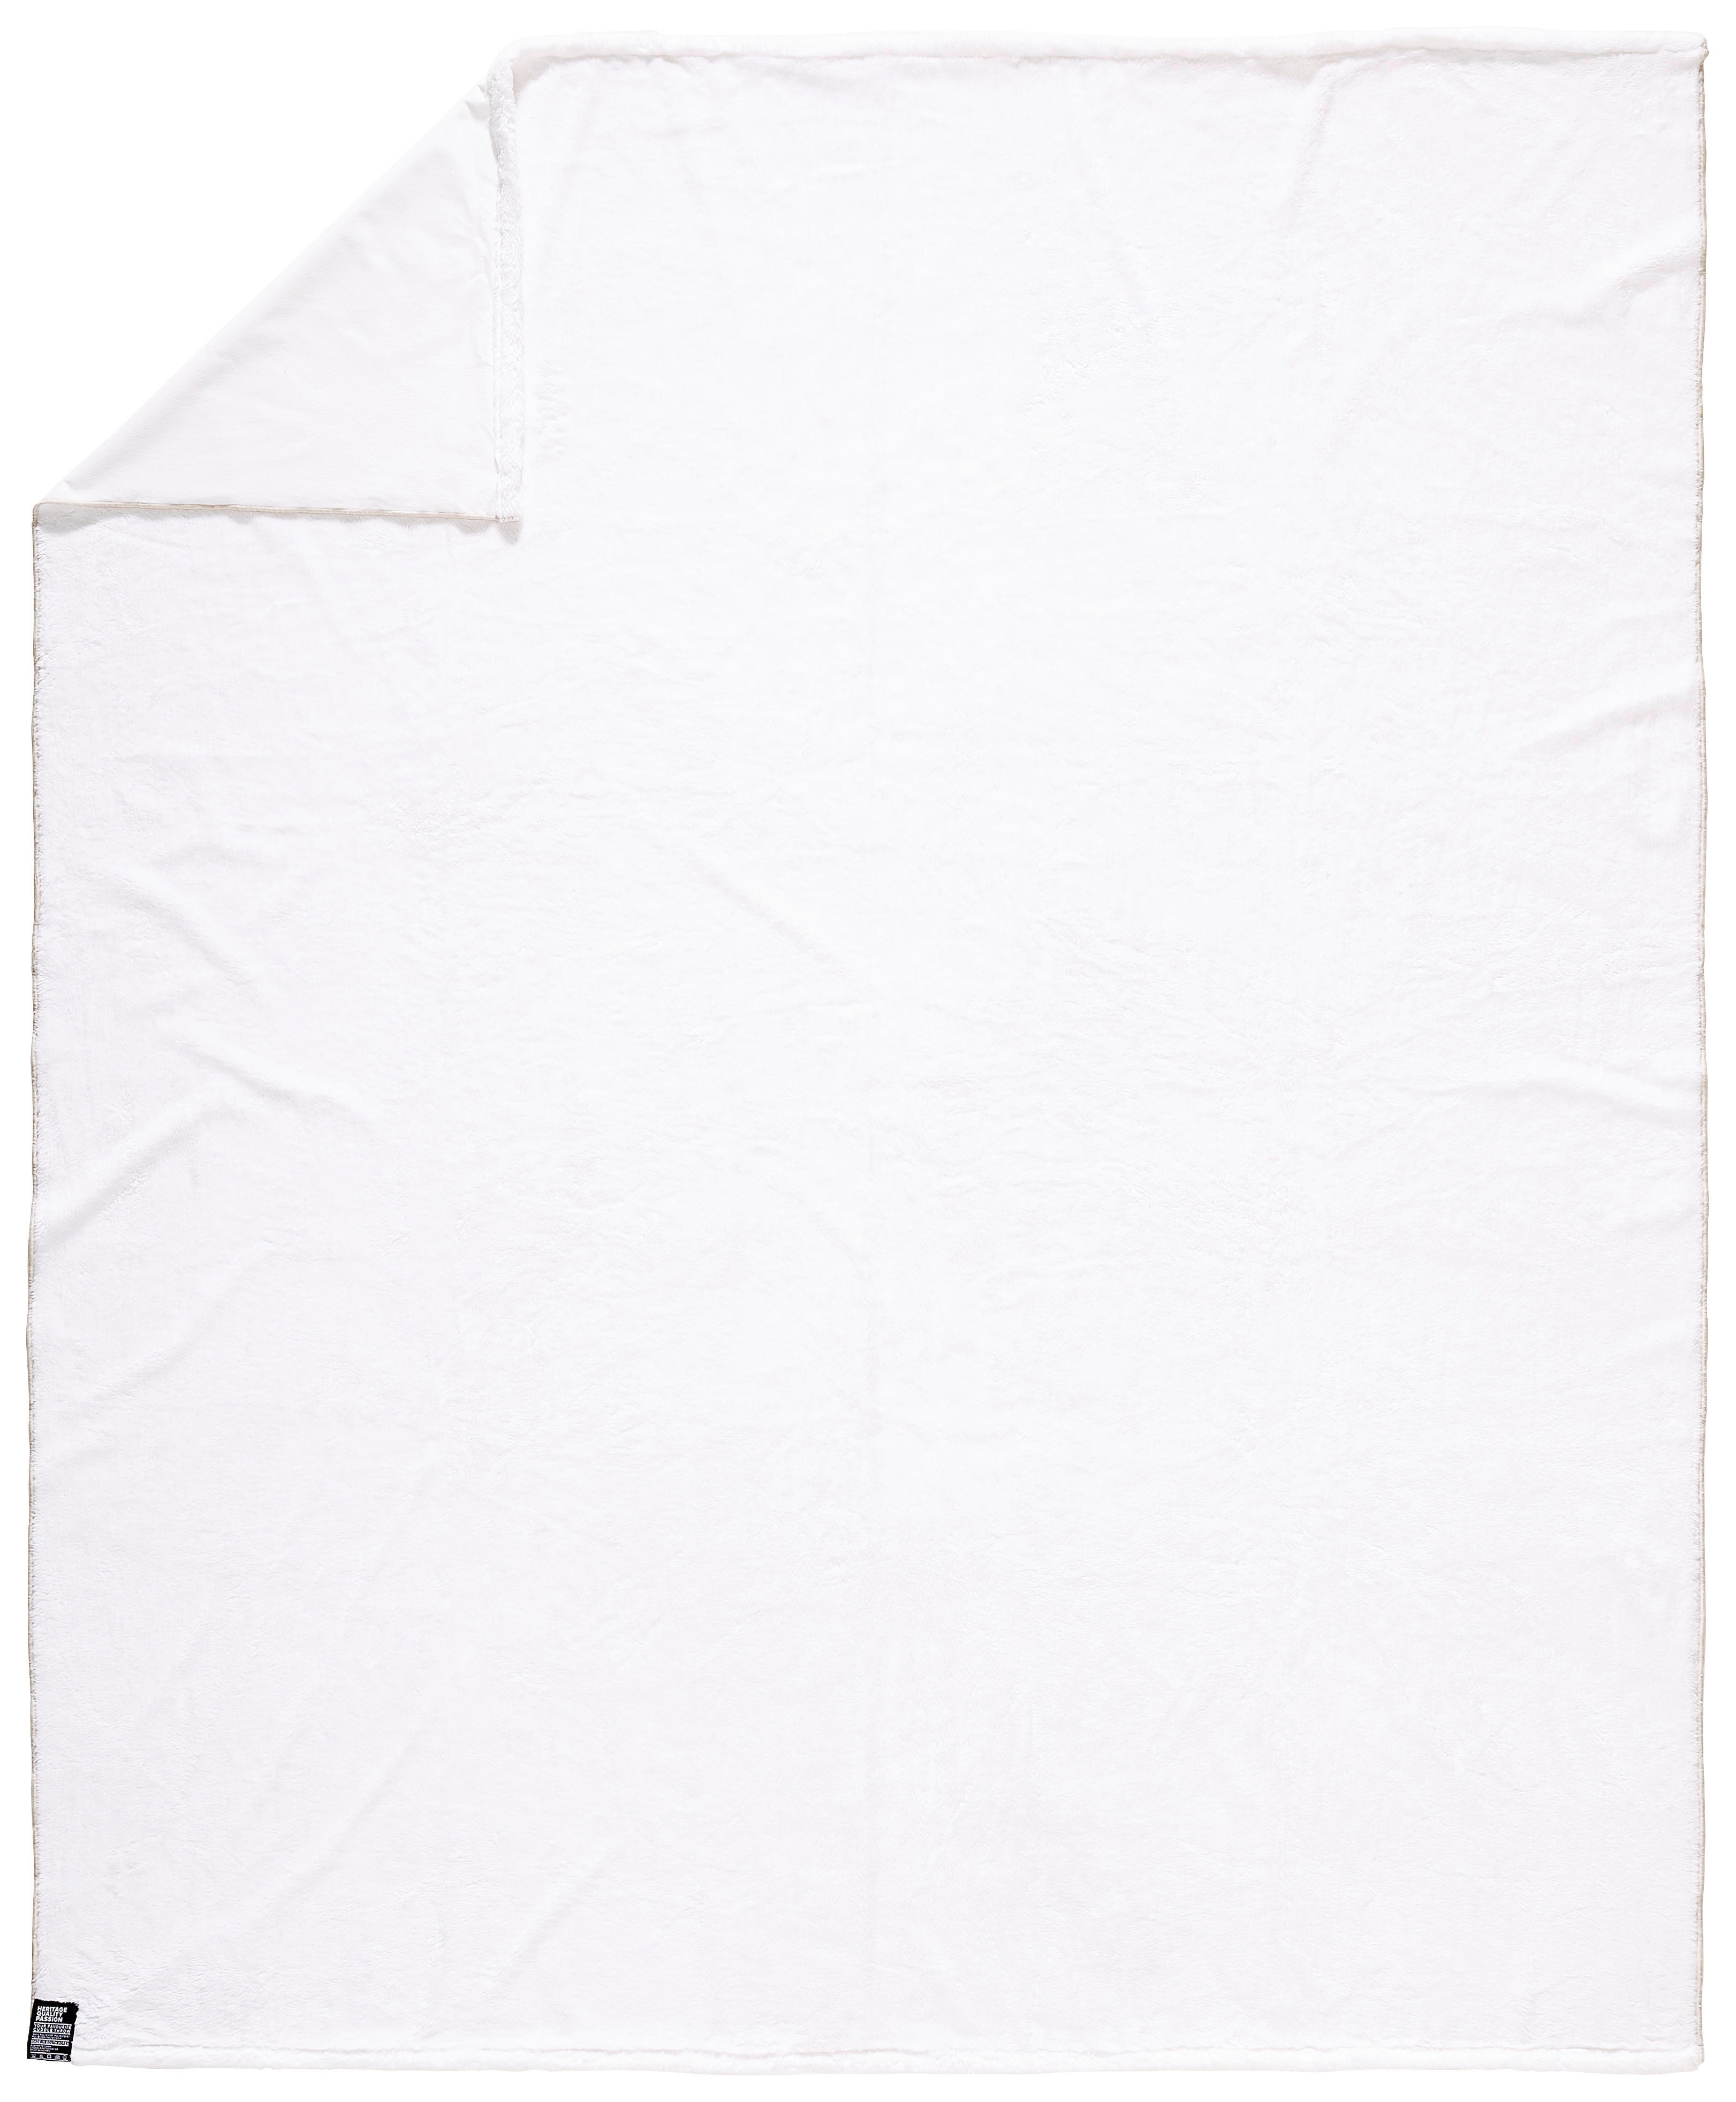 FELLDECKE REBORN BLISS 140/190 cm  - Weiß, KONVENTIONELL, Textil (140/190cm) - Zoeppritz